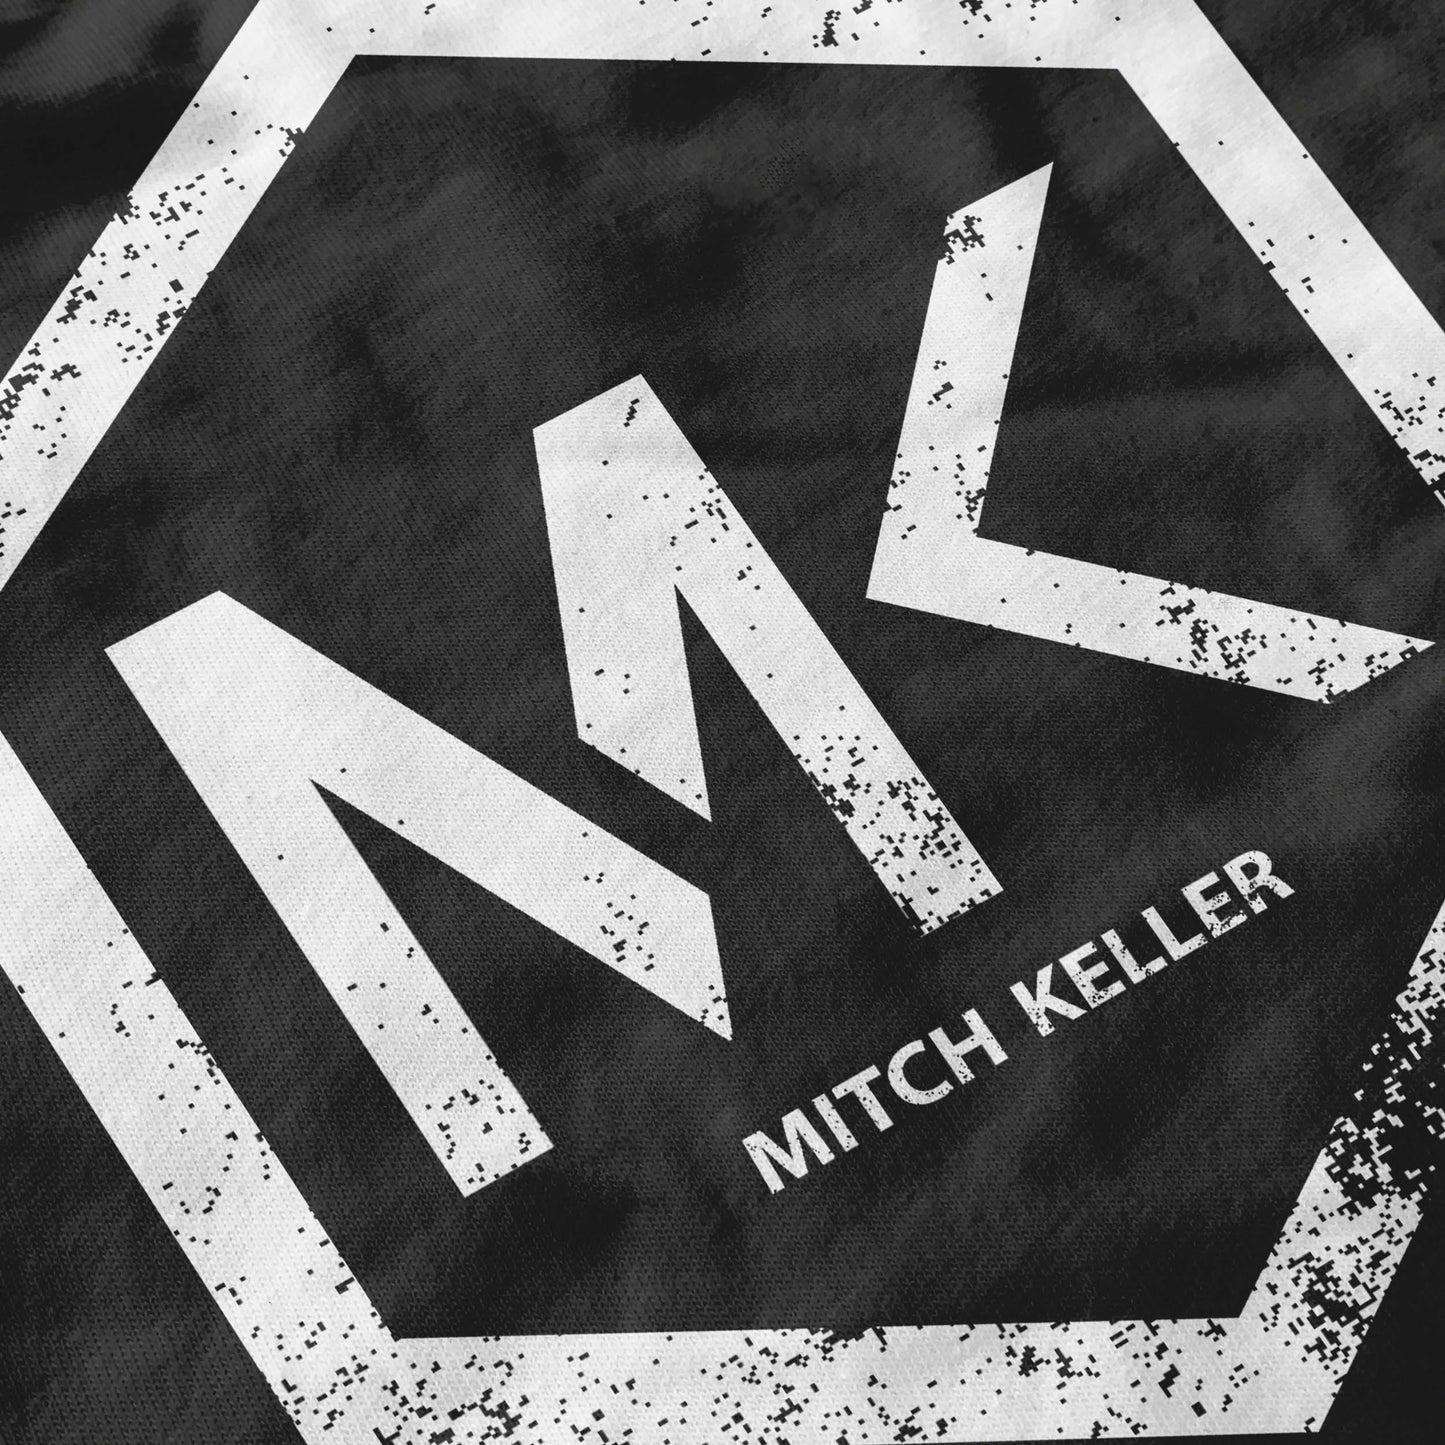 Mitch Keller Fan Shirt